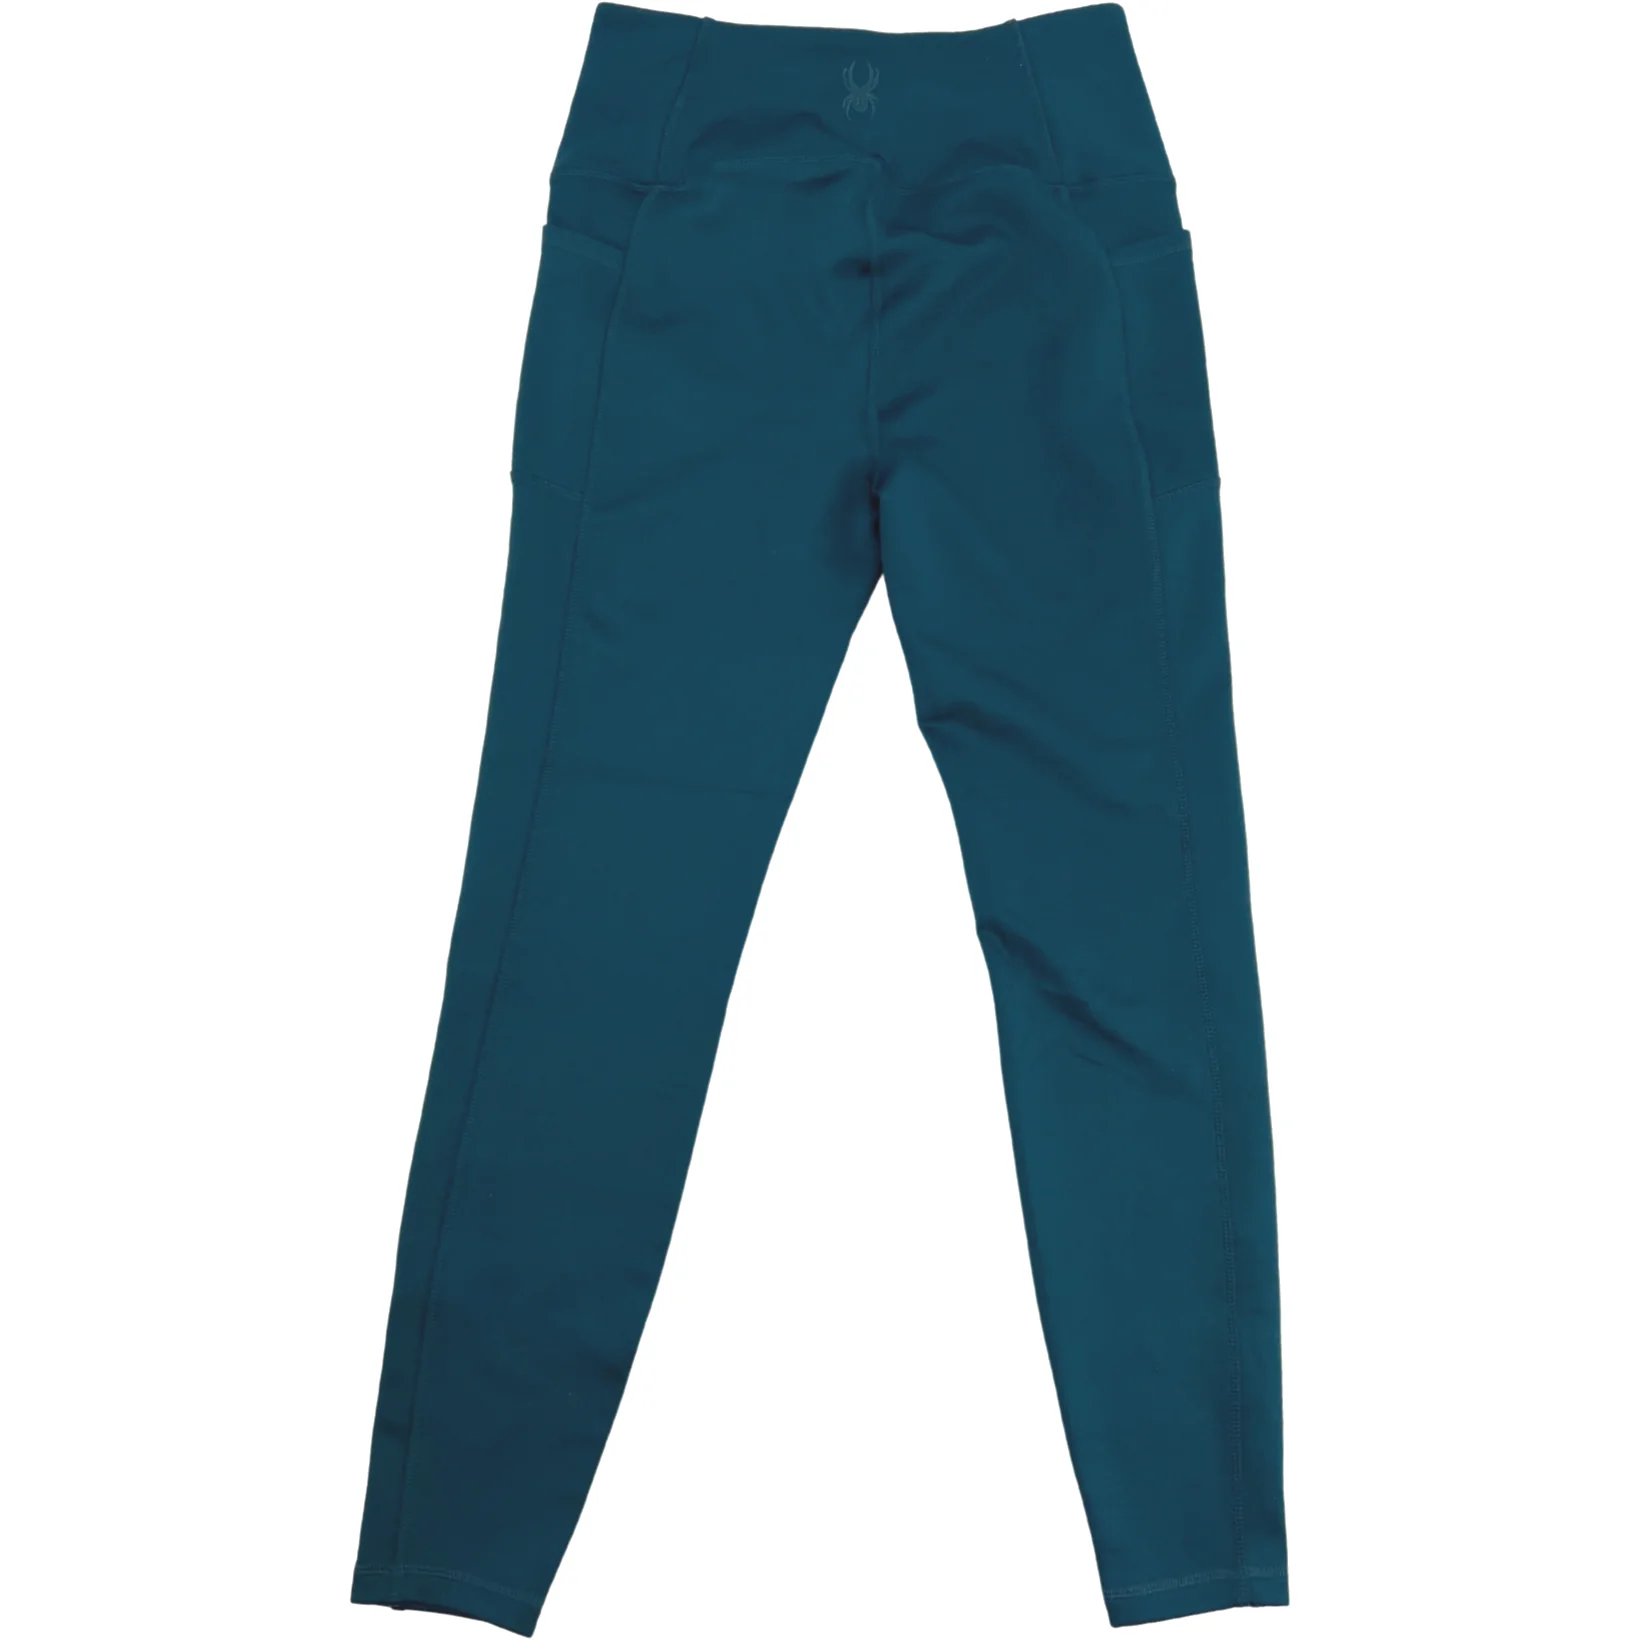 Spyder active Dark Blue side pocket high rise leggings womens Large